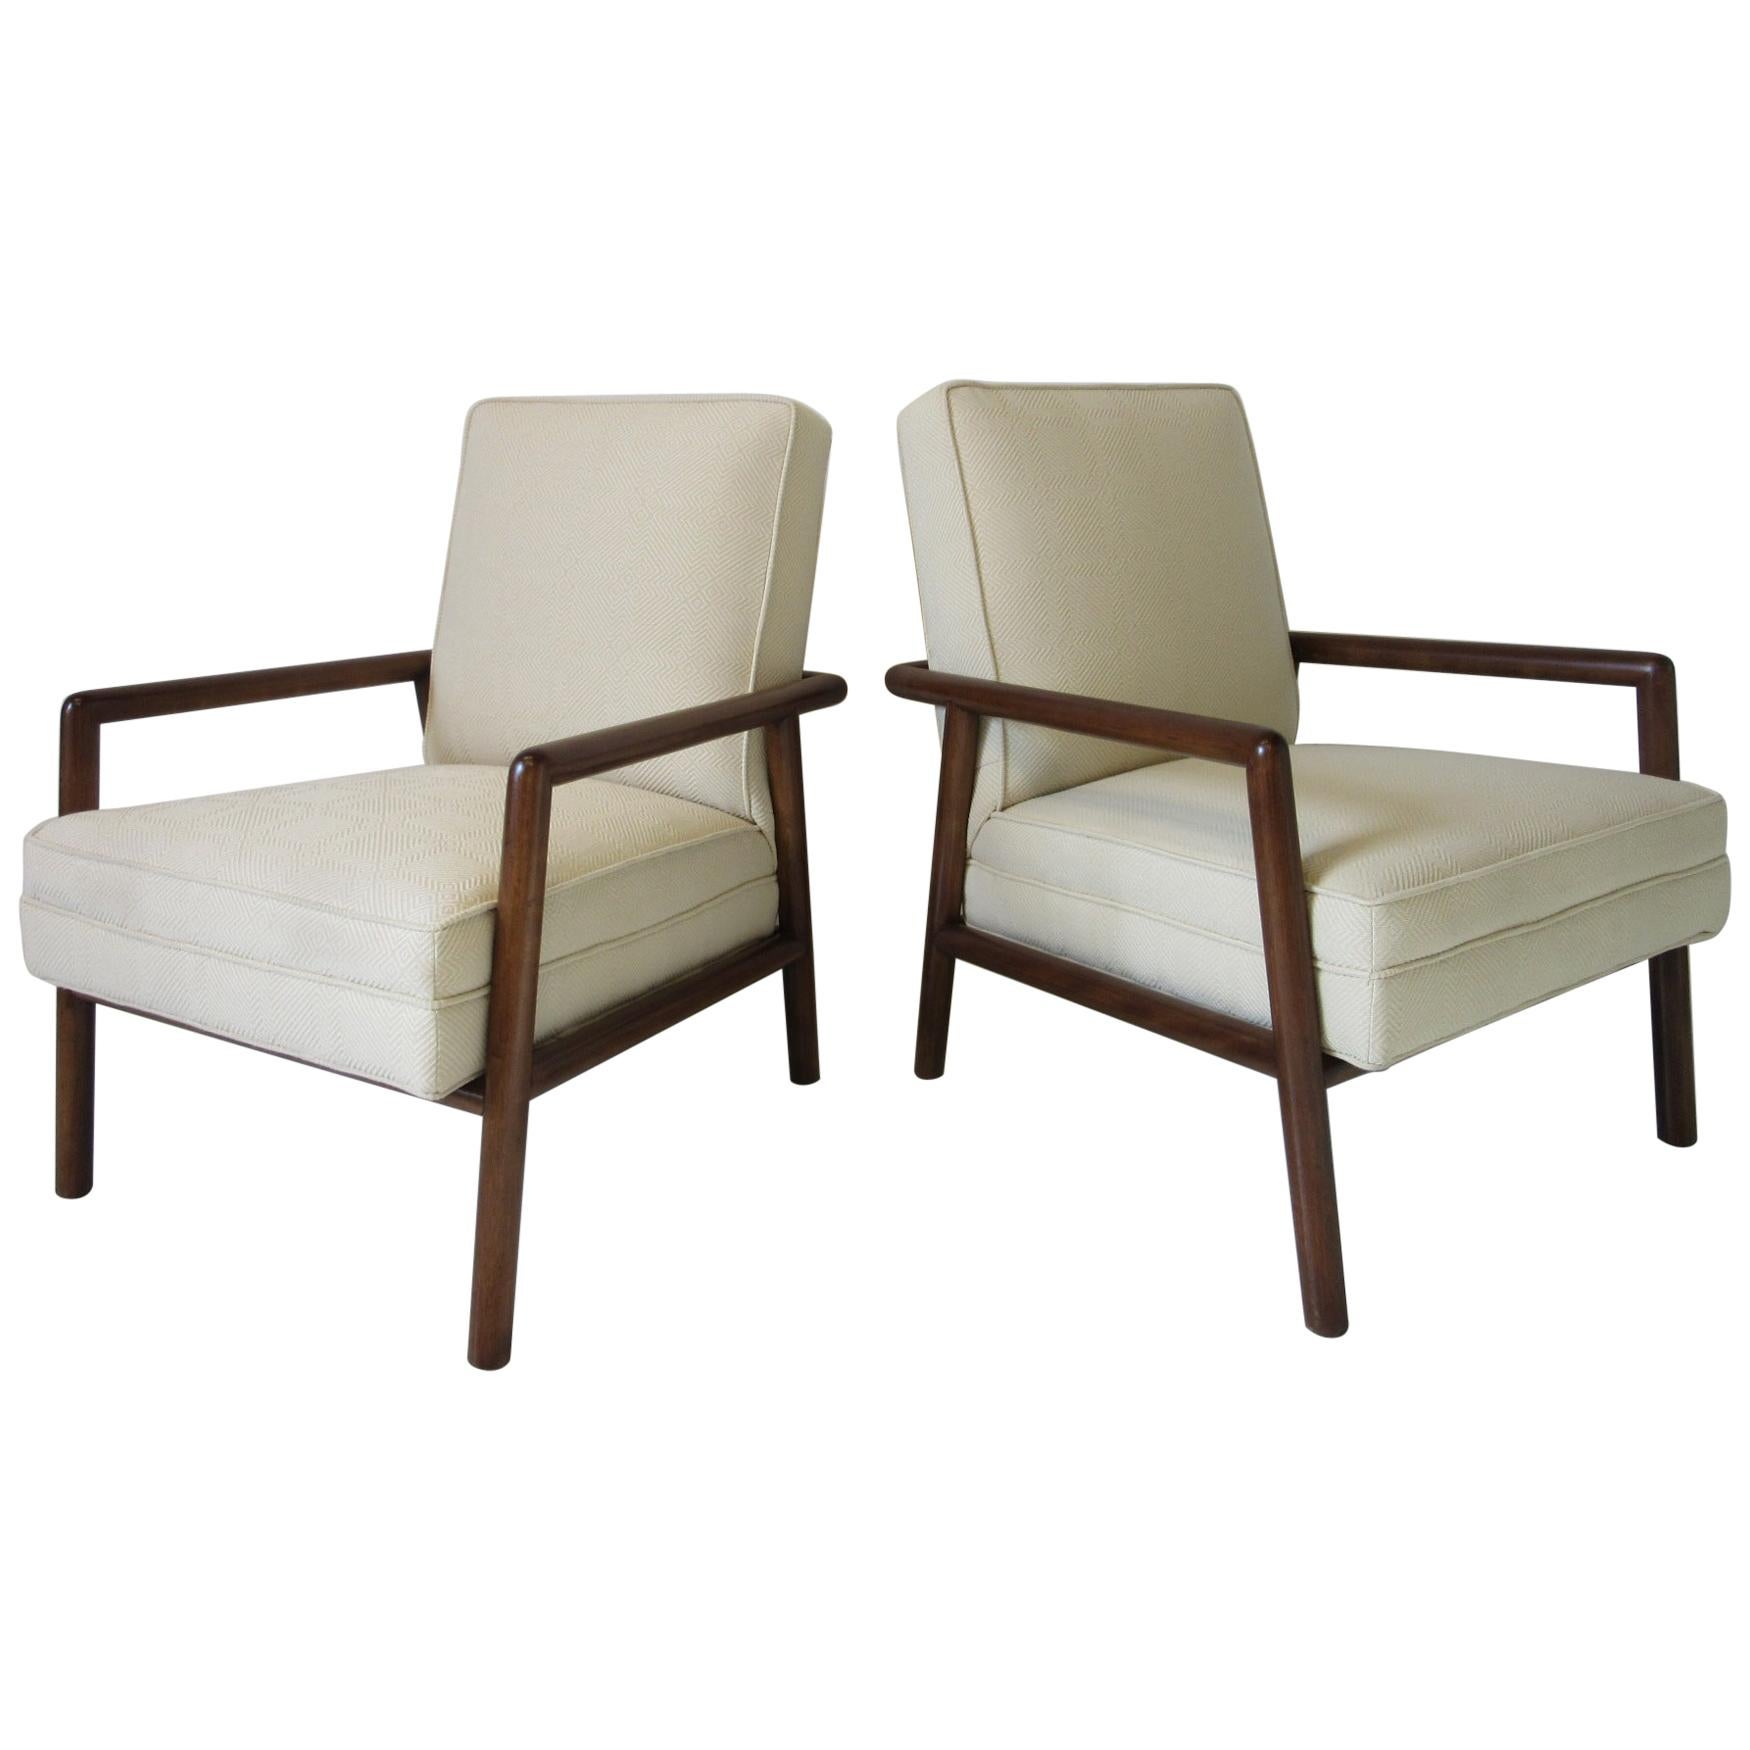 T.H. Robsjohns-Gibbings Lounge Chairs for Widdicomb